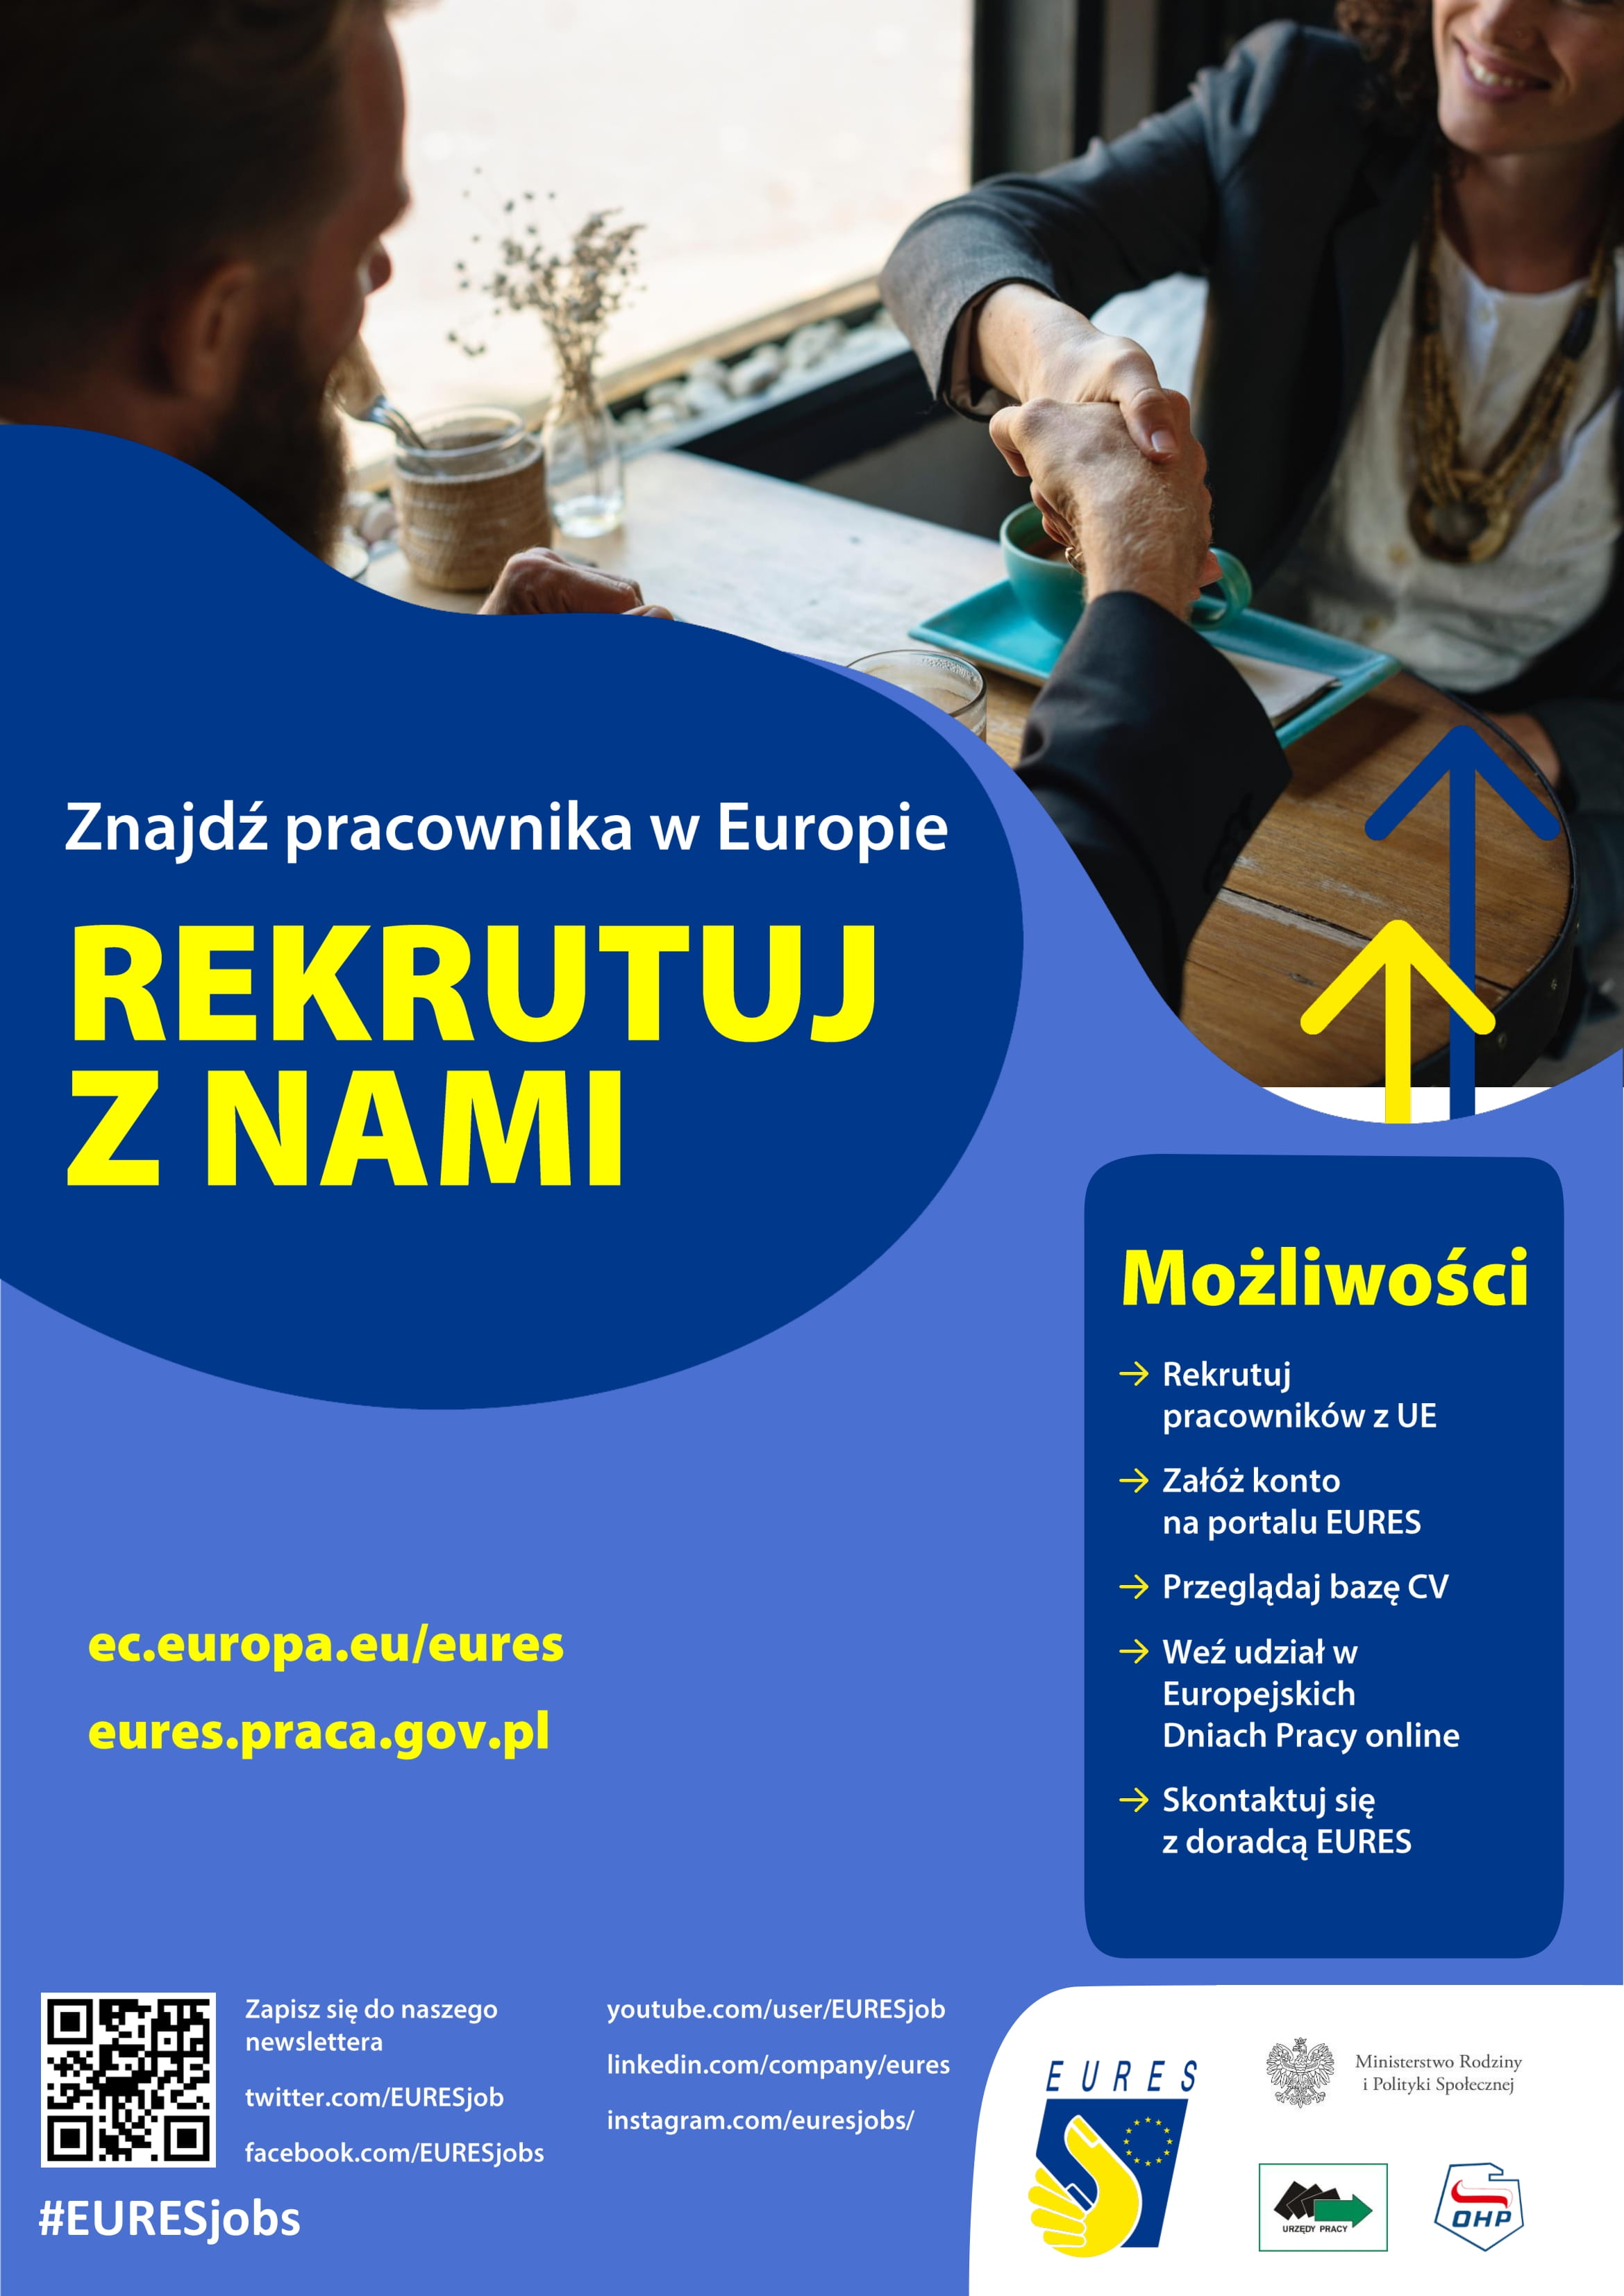 Plakat promuje rekrutację pracowników za pomocą portalu eures.praca.gov.pl